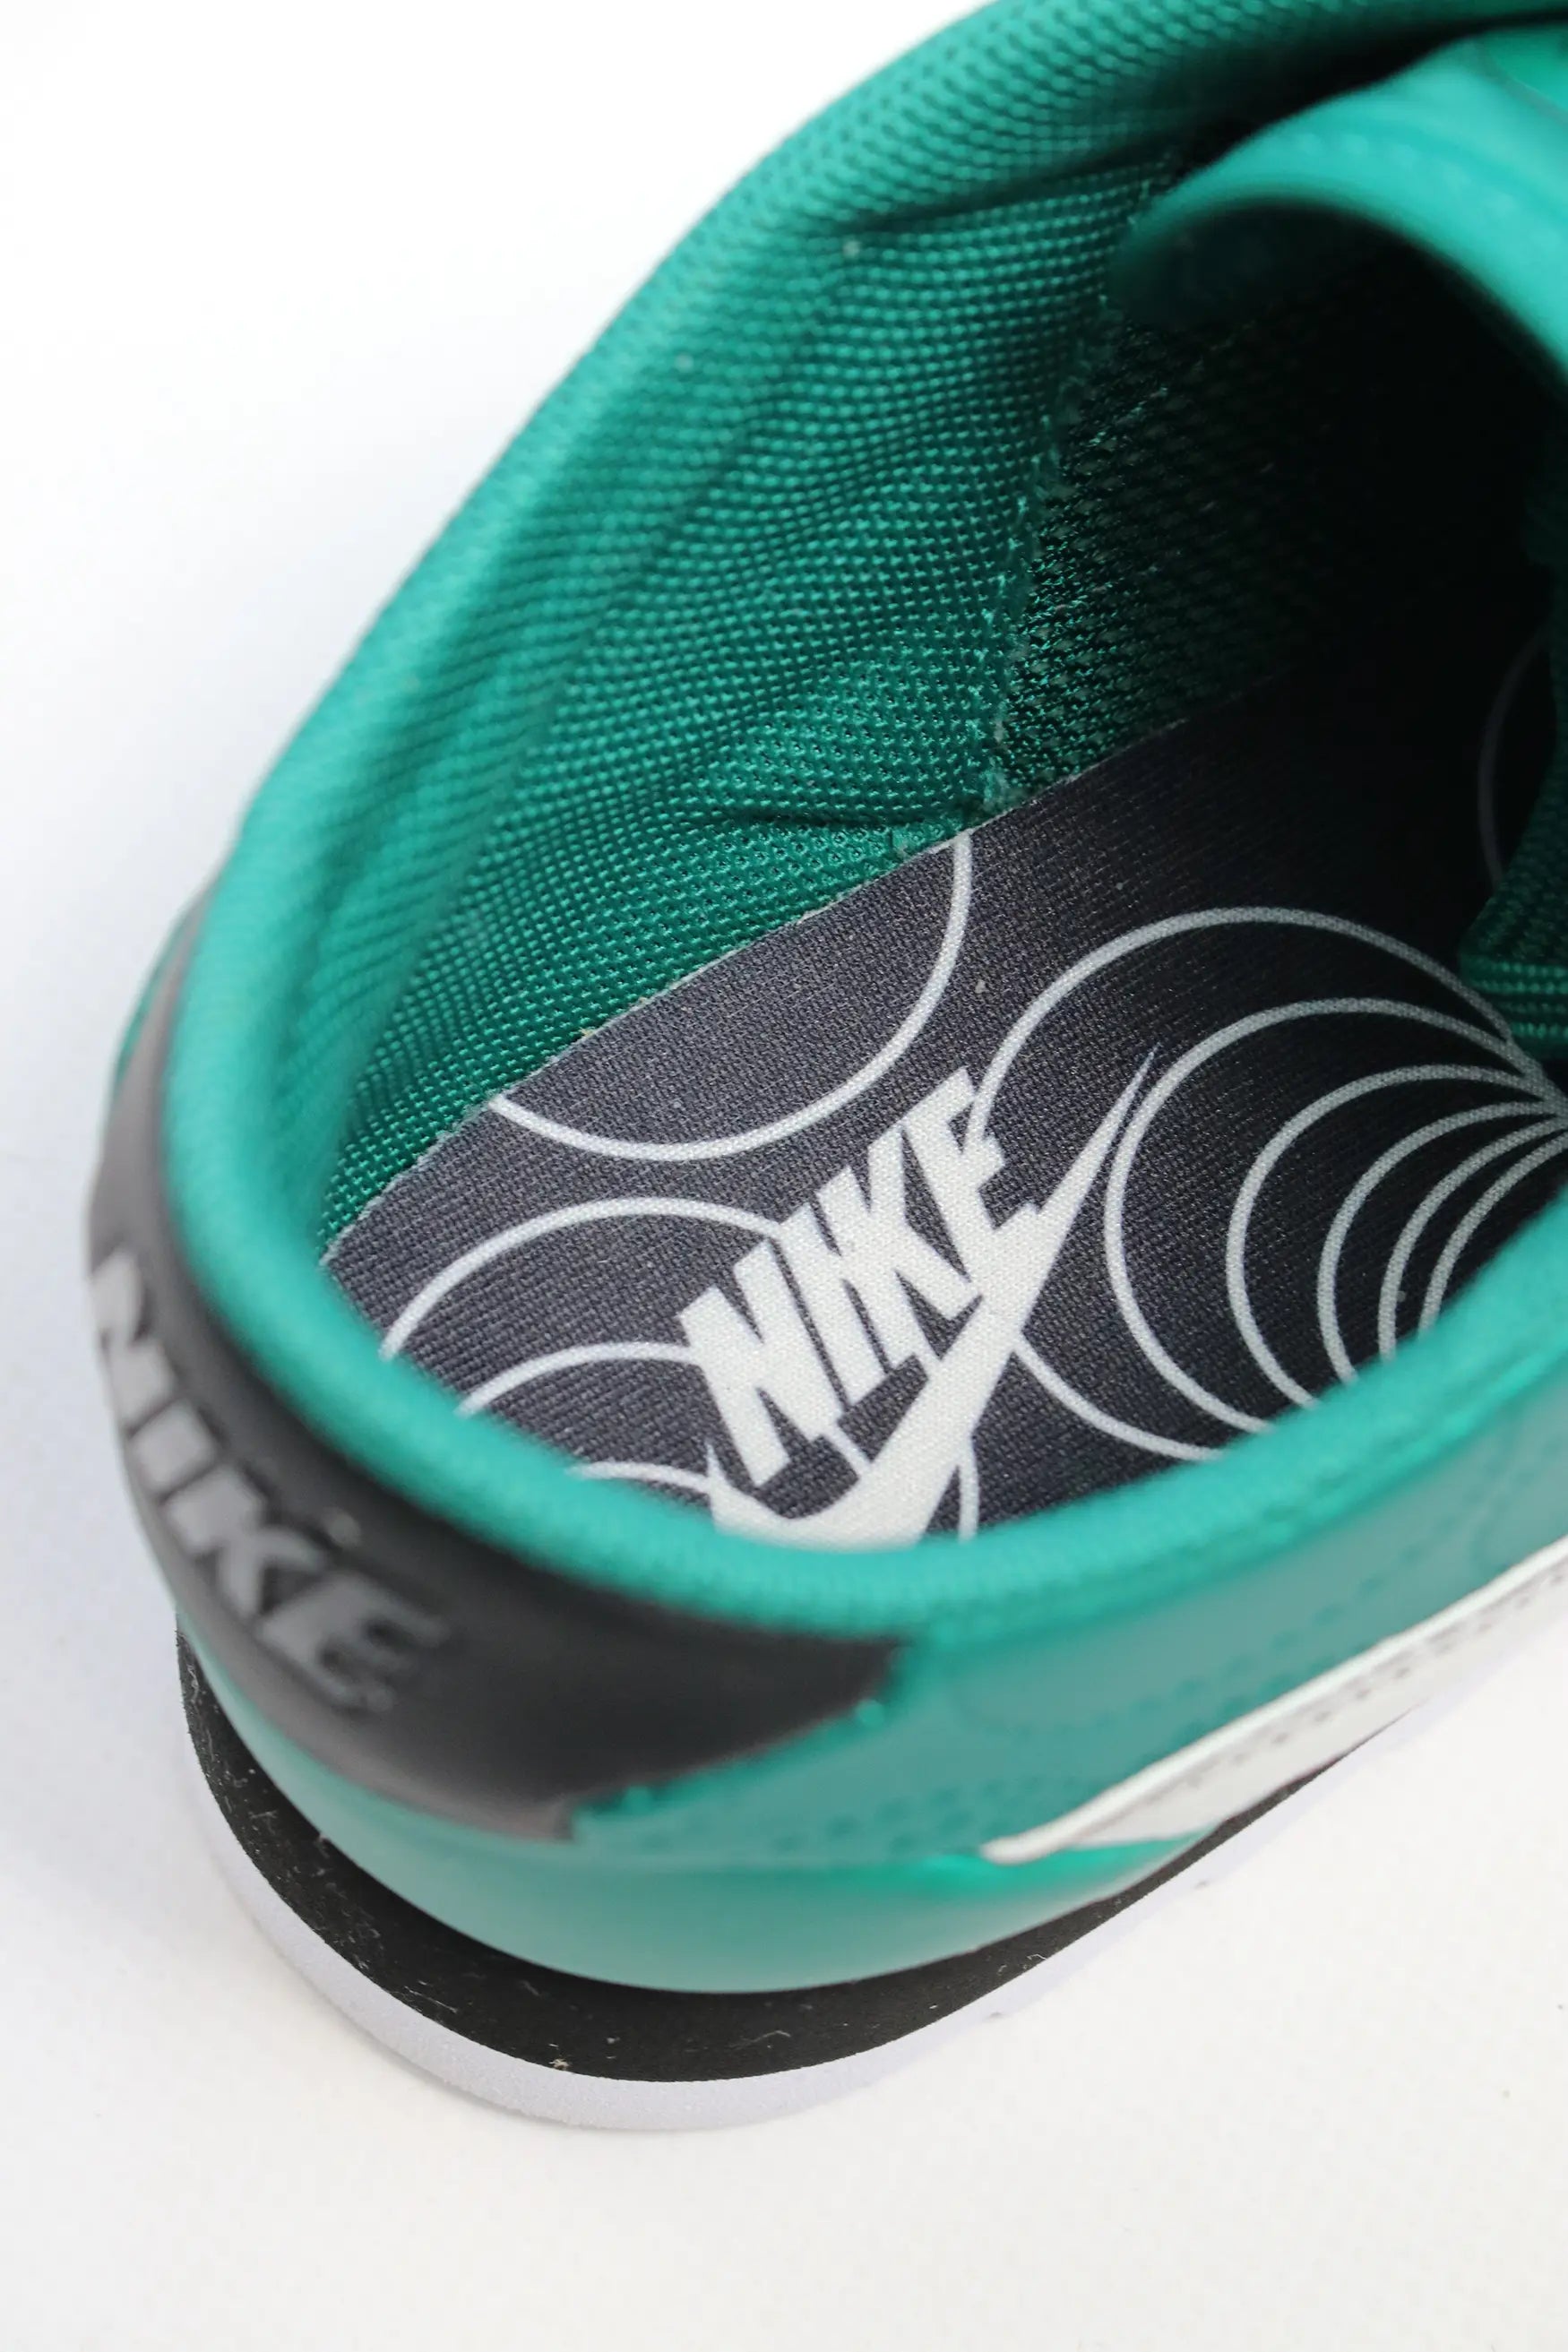 Nike WMNS Cortez Ultra LOTC QS